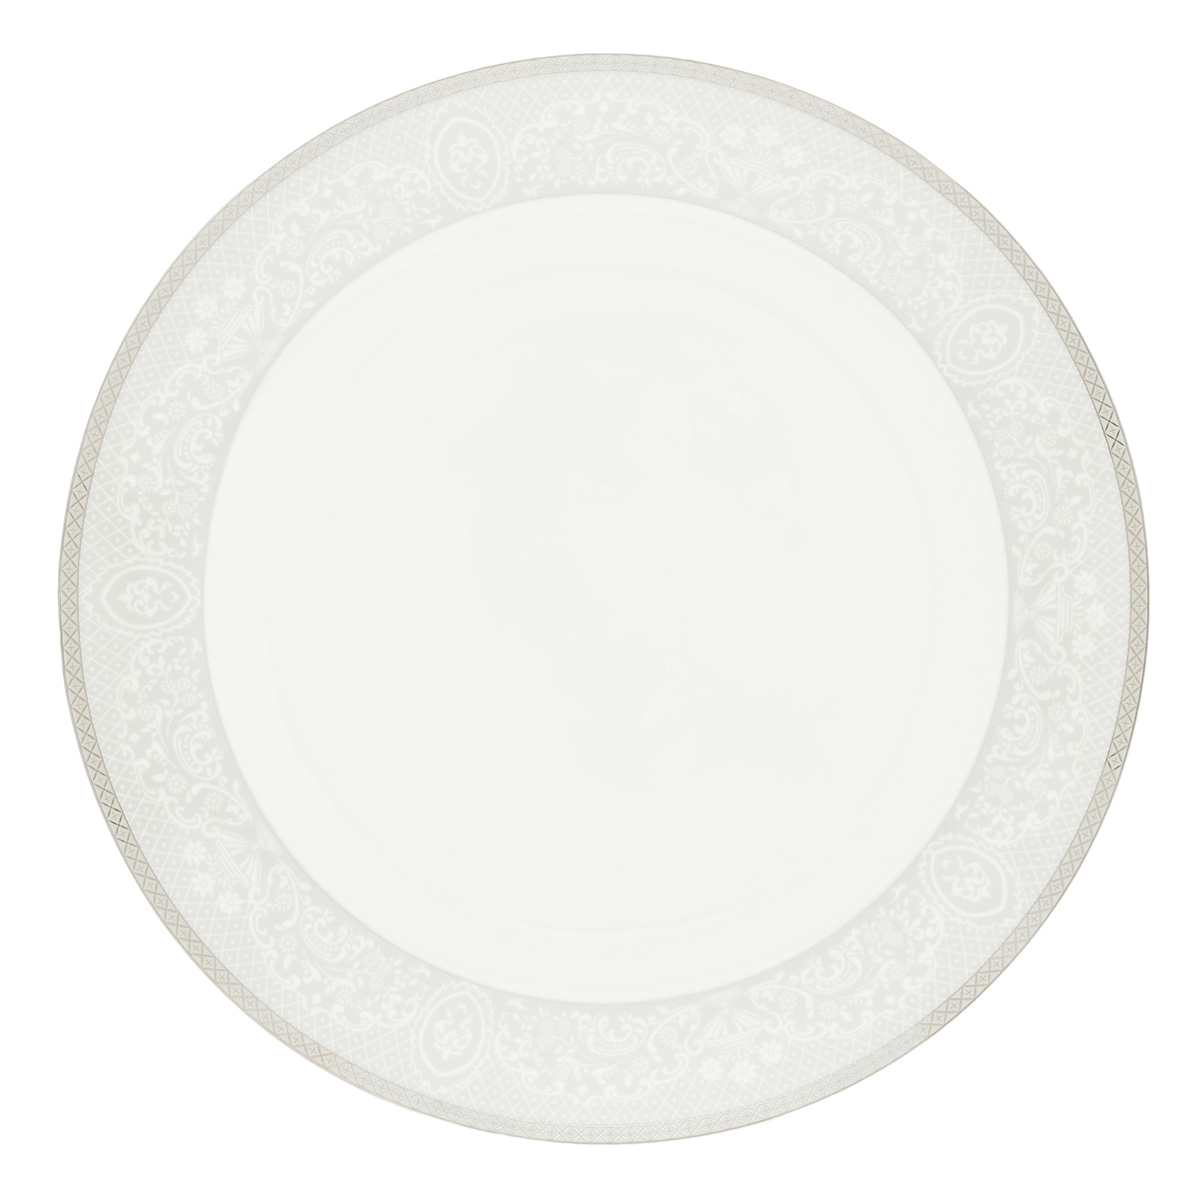 Набор обеденных тарелок Gipfel Annet 42785 27 см 4 предмета набор обеденных тарелок gipfel annet 42785 27 см 4 предмета